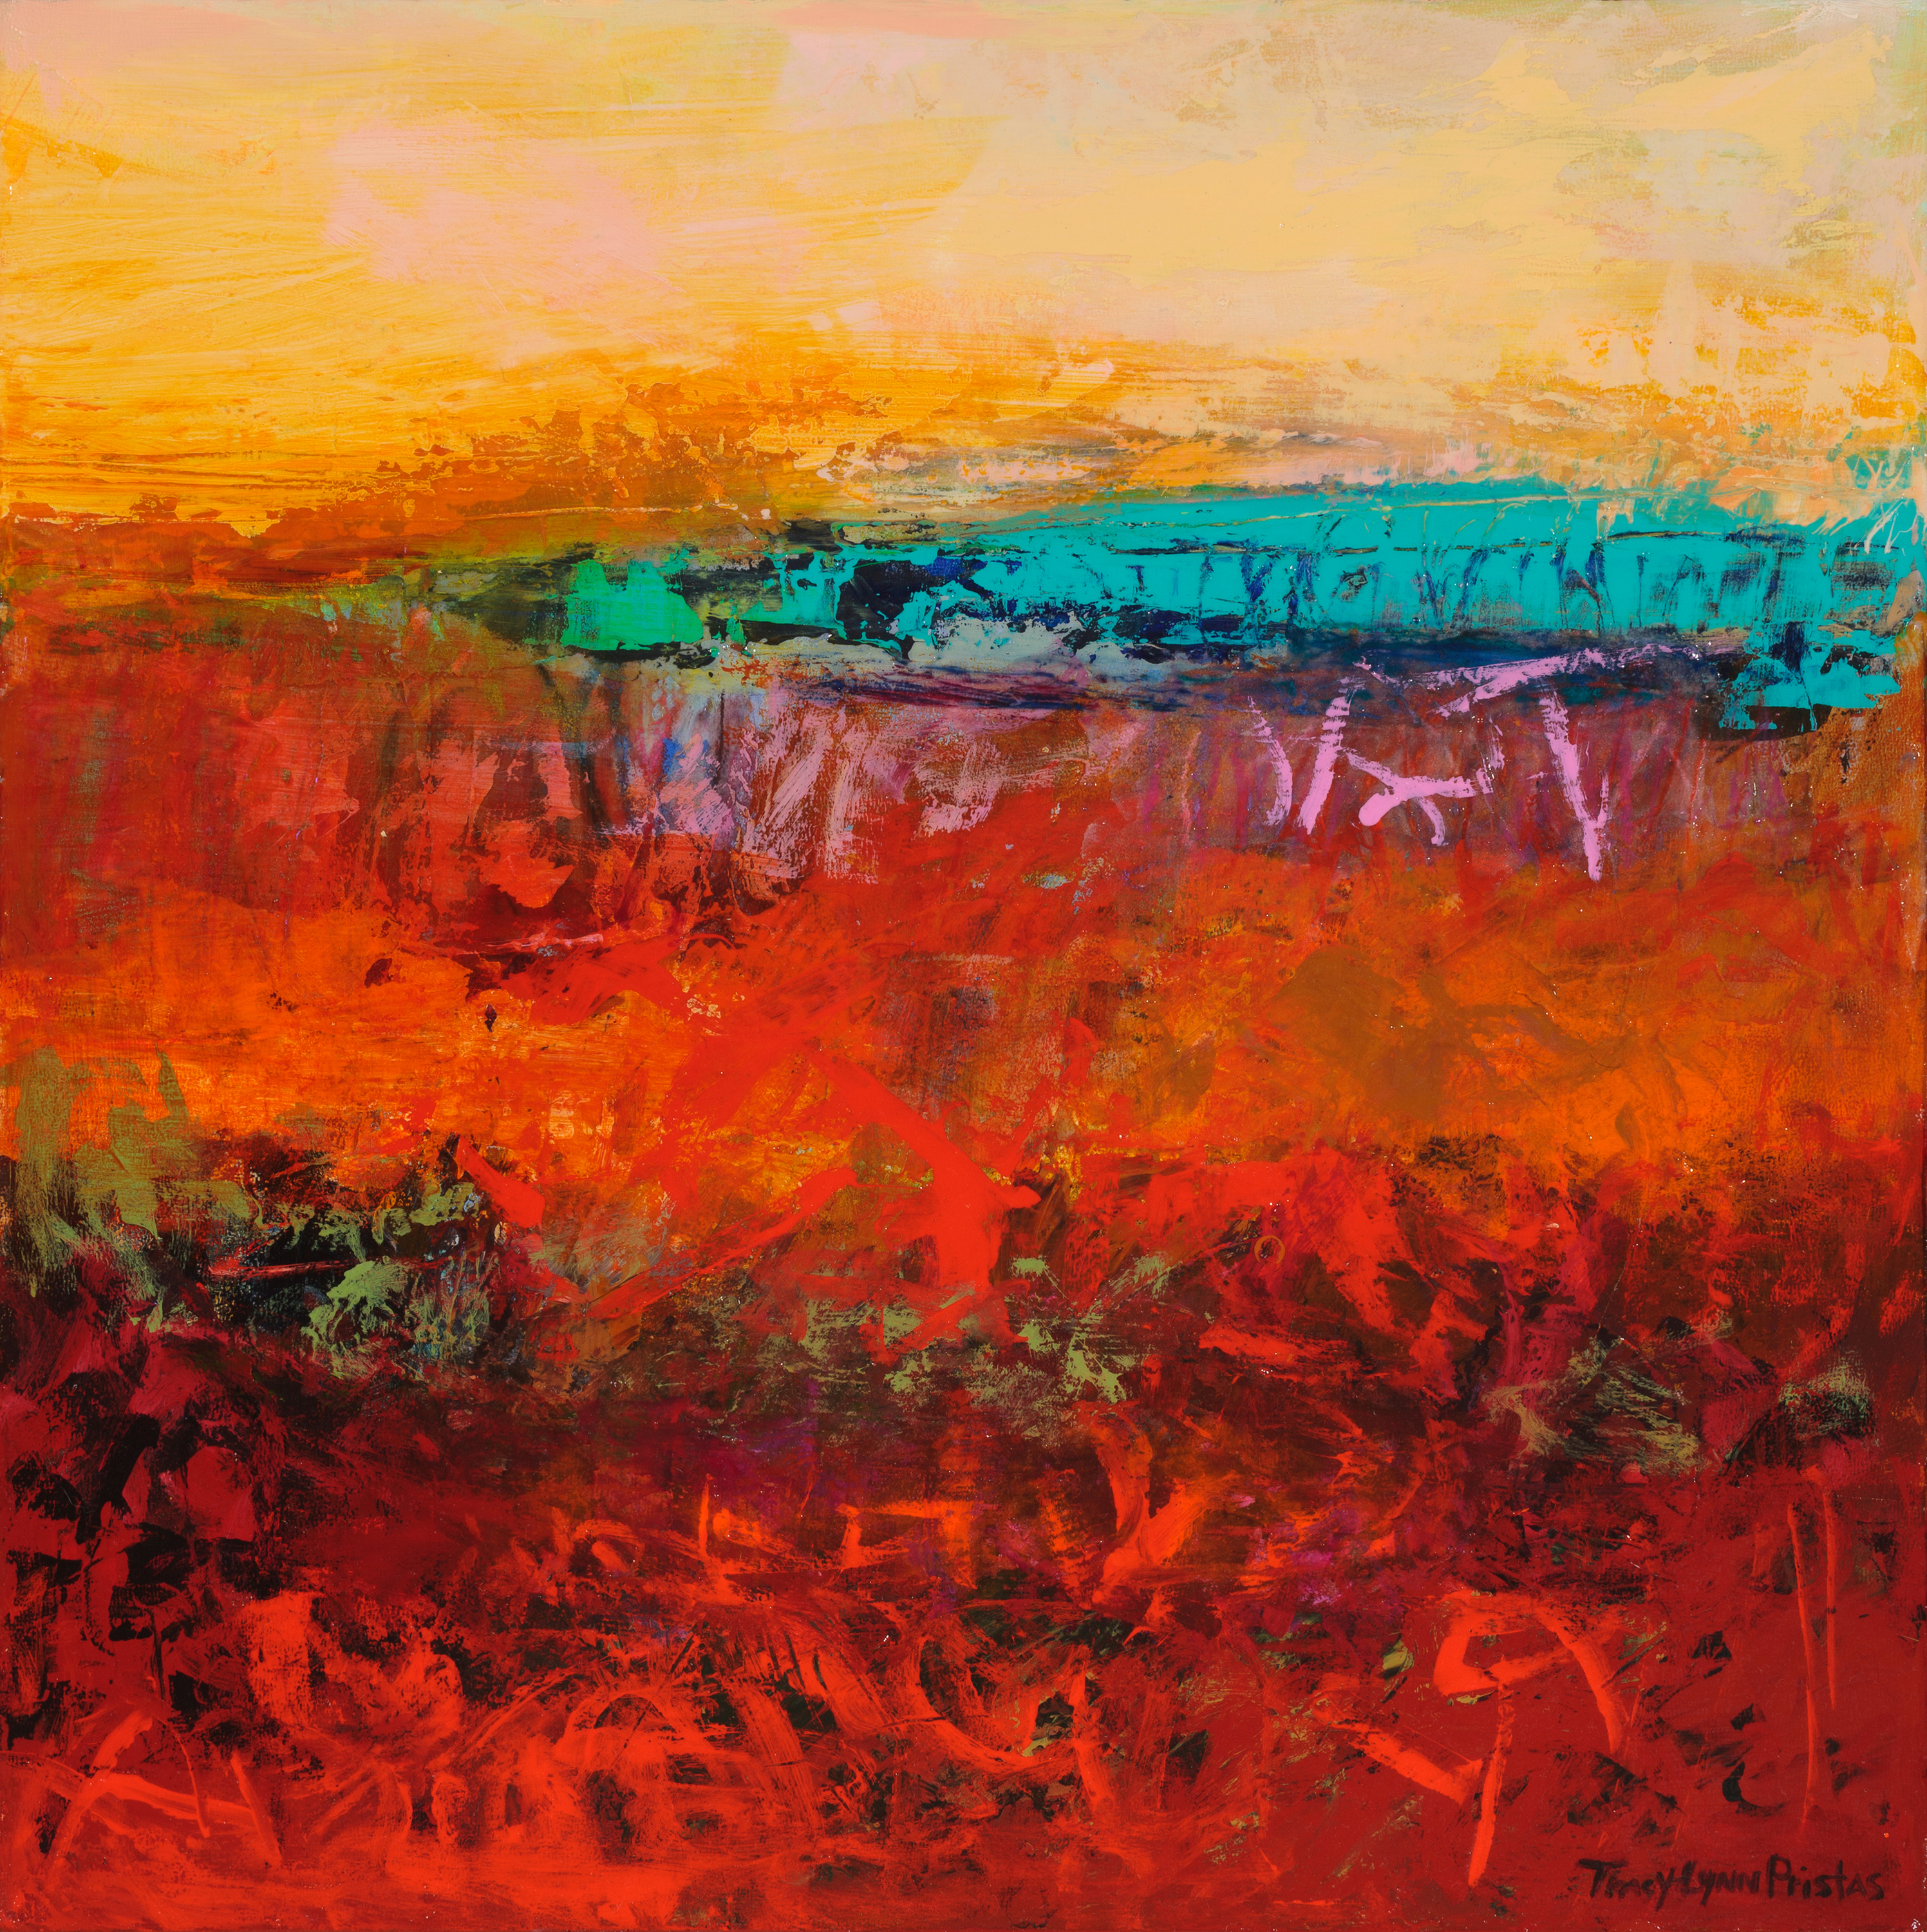 Tracy lynn pristas abstract landscape southwestern art mesa glory 18 x 18 vtrnep